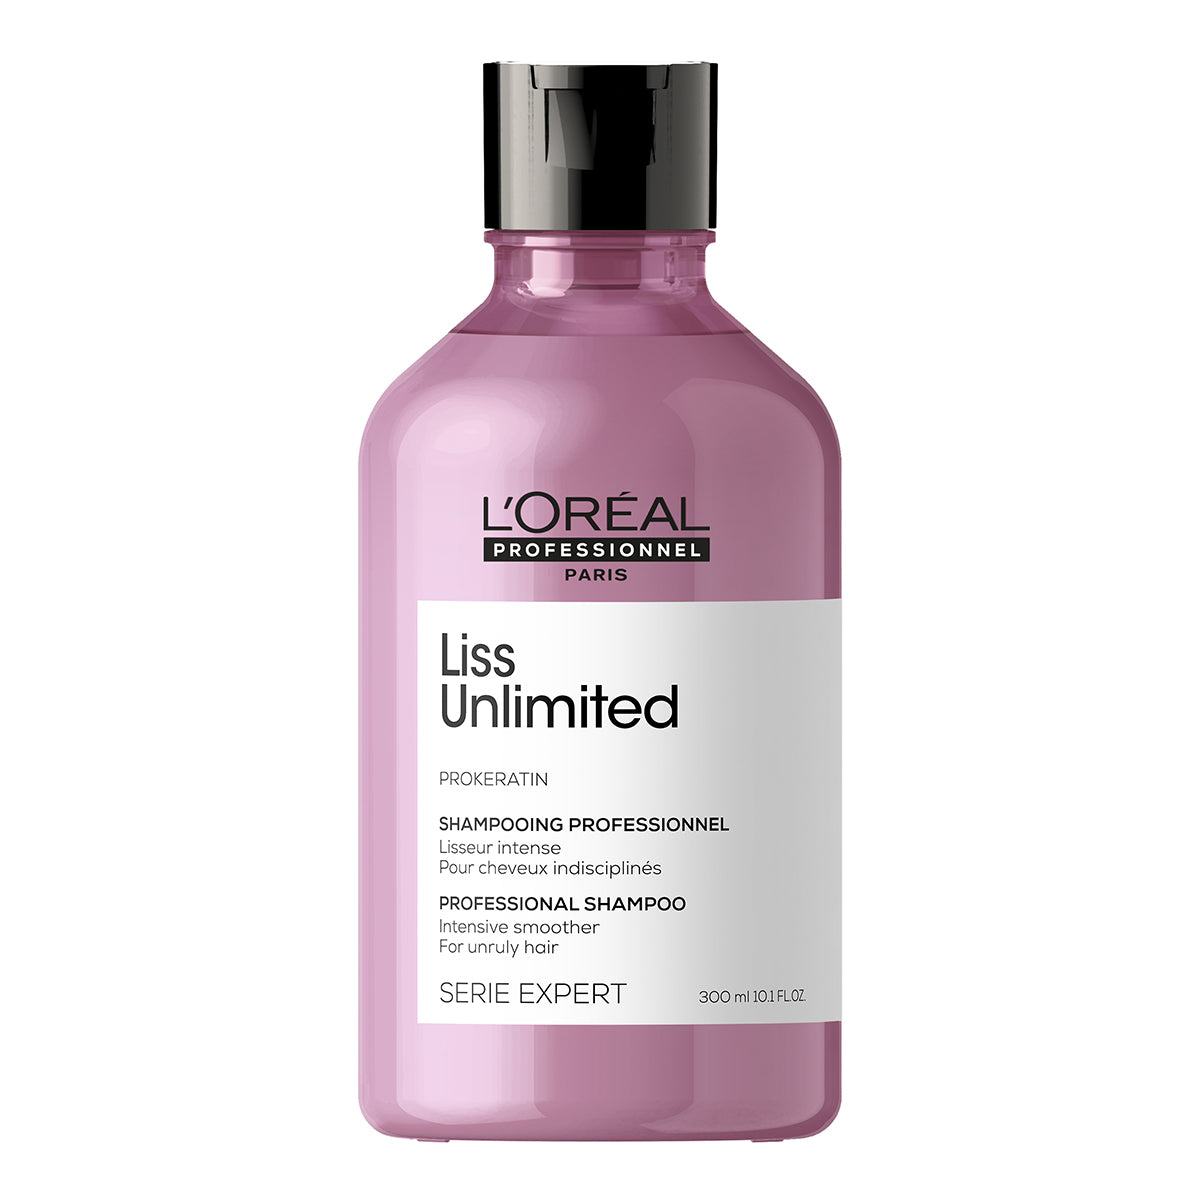 L’Oreal Liss Unlimited Shampoo